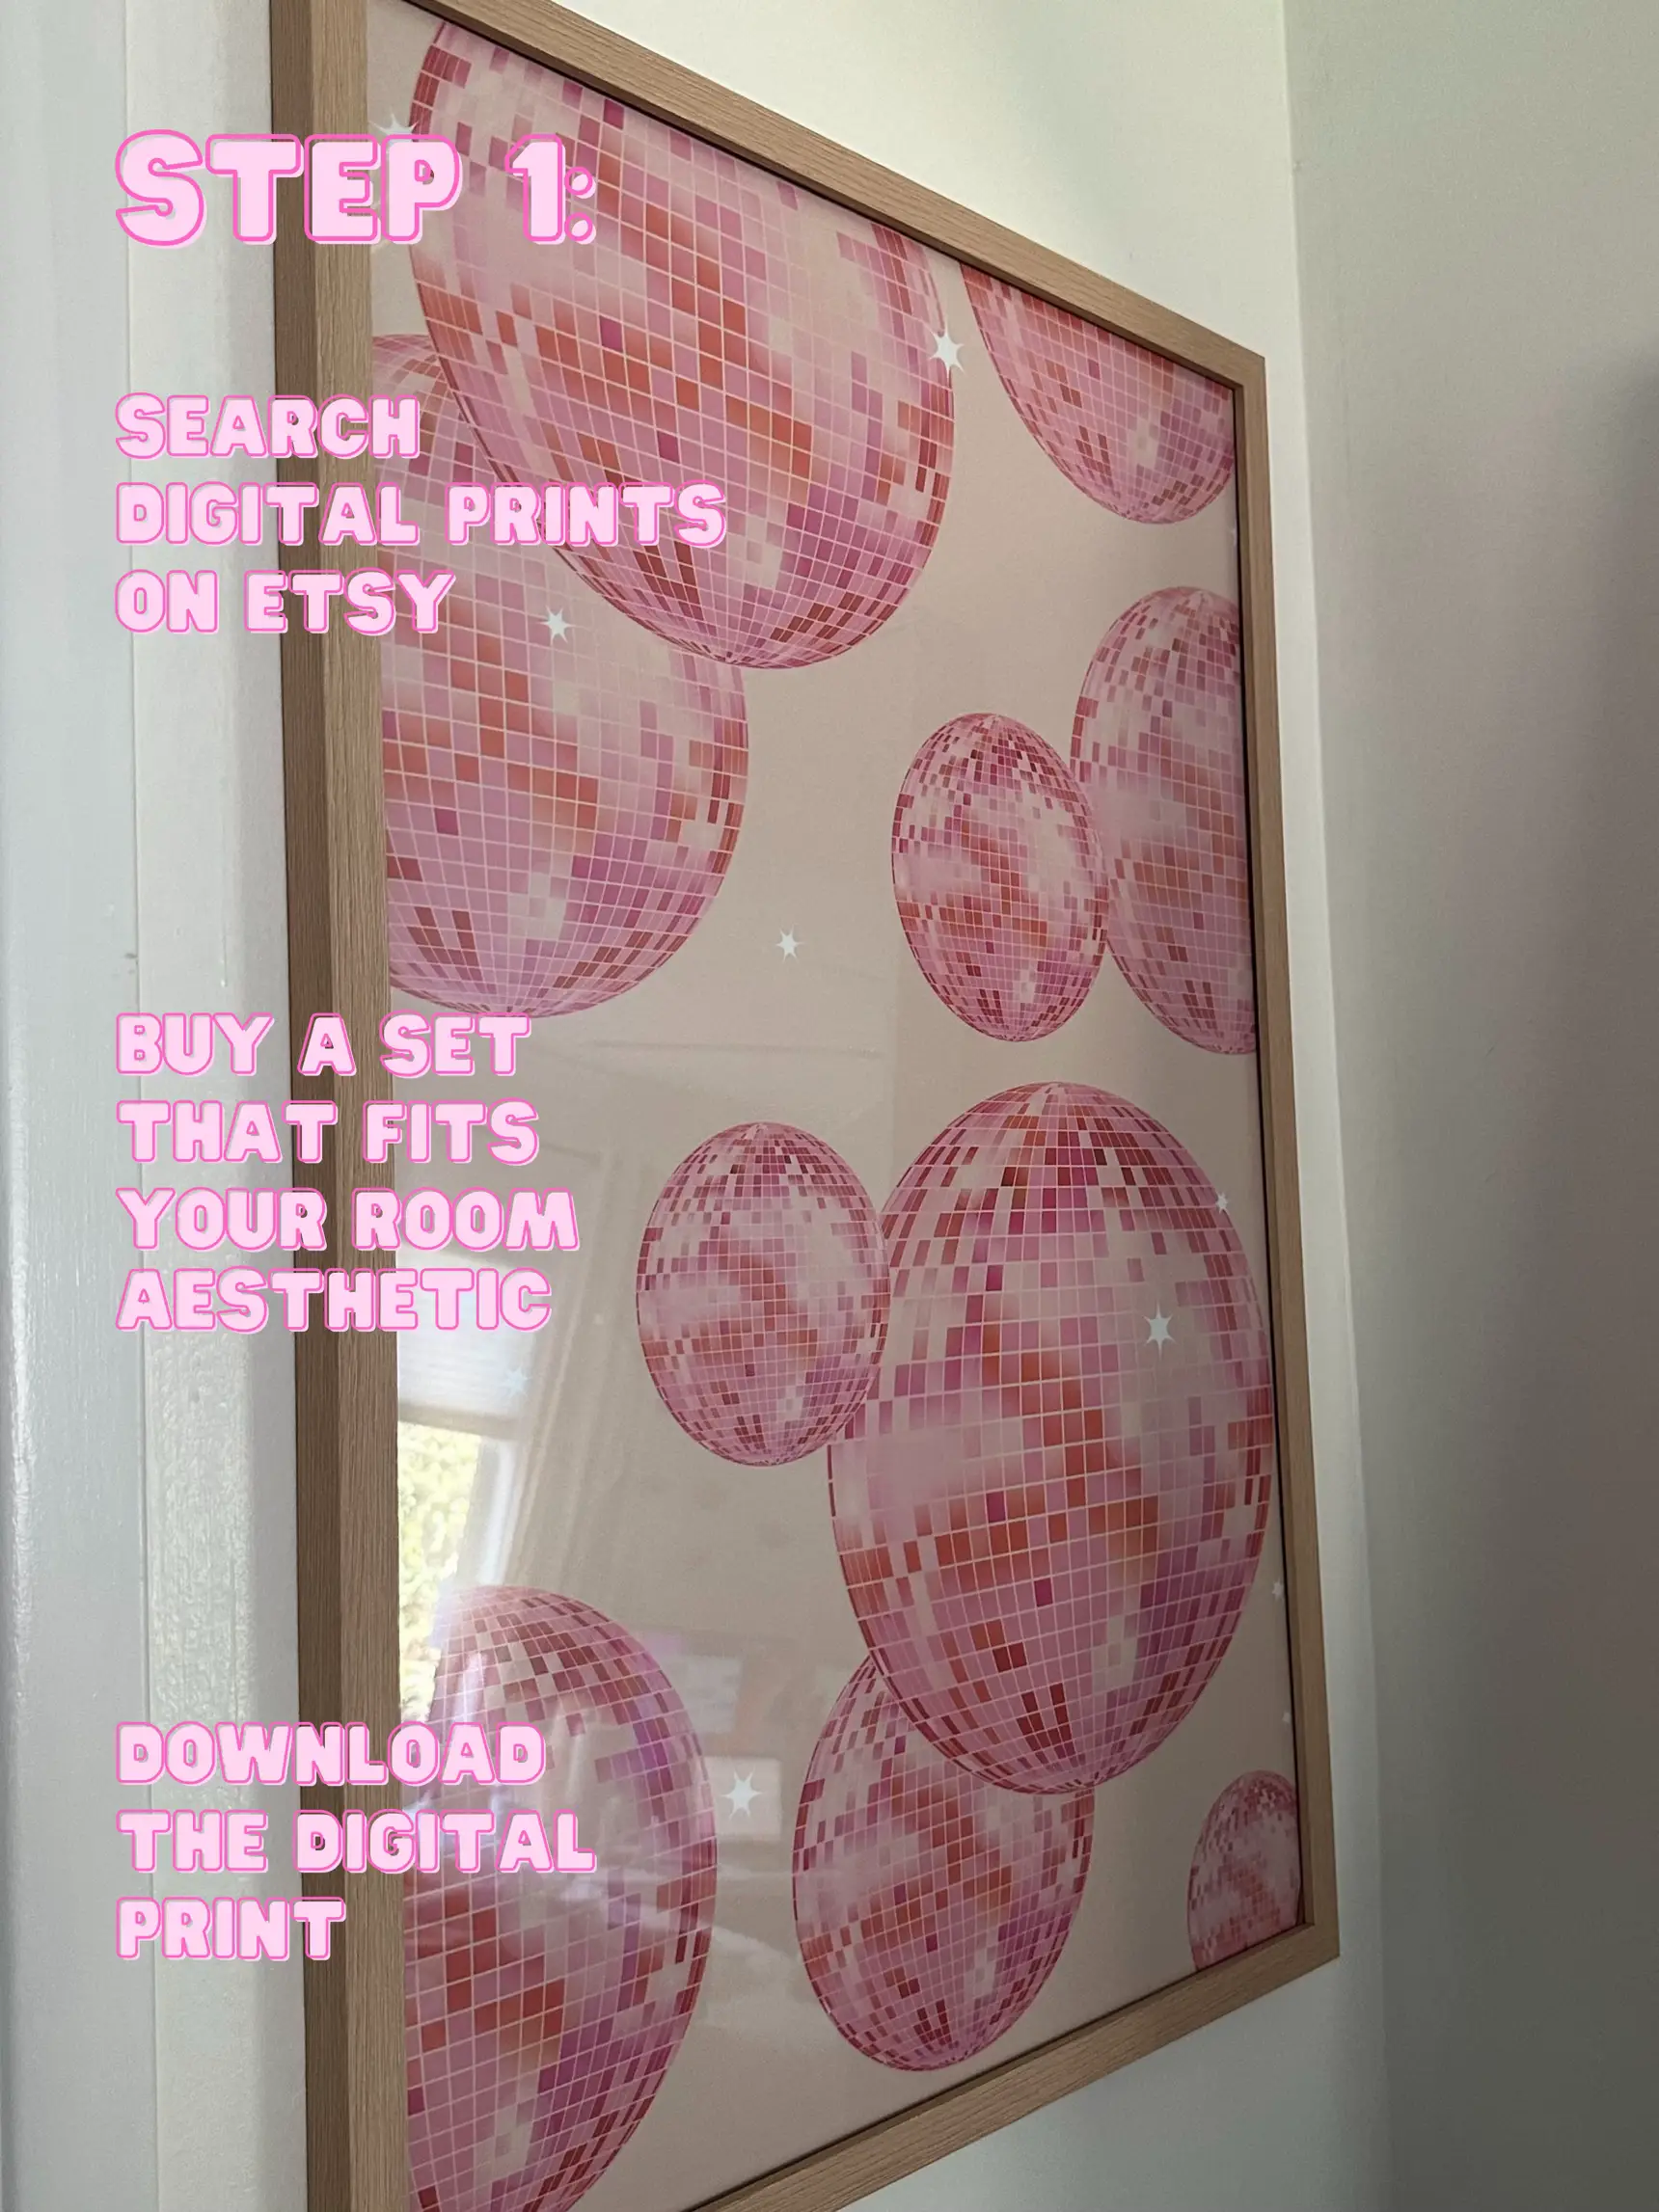 Buy Boss bitch energy pink print - A1, A2, A3 or A4 art prints on